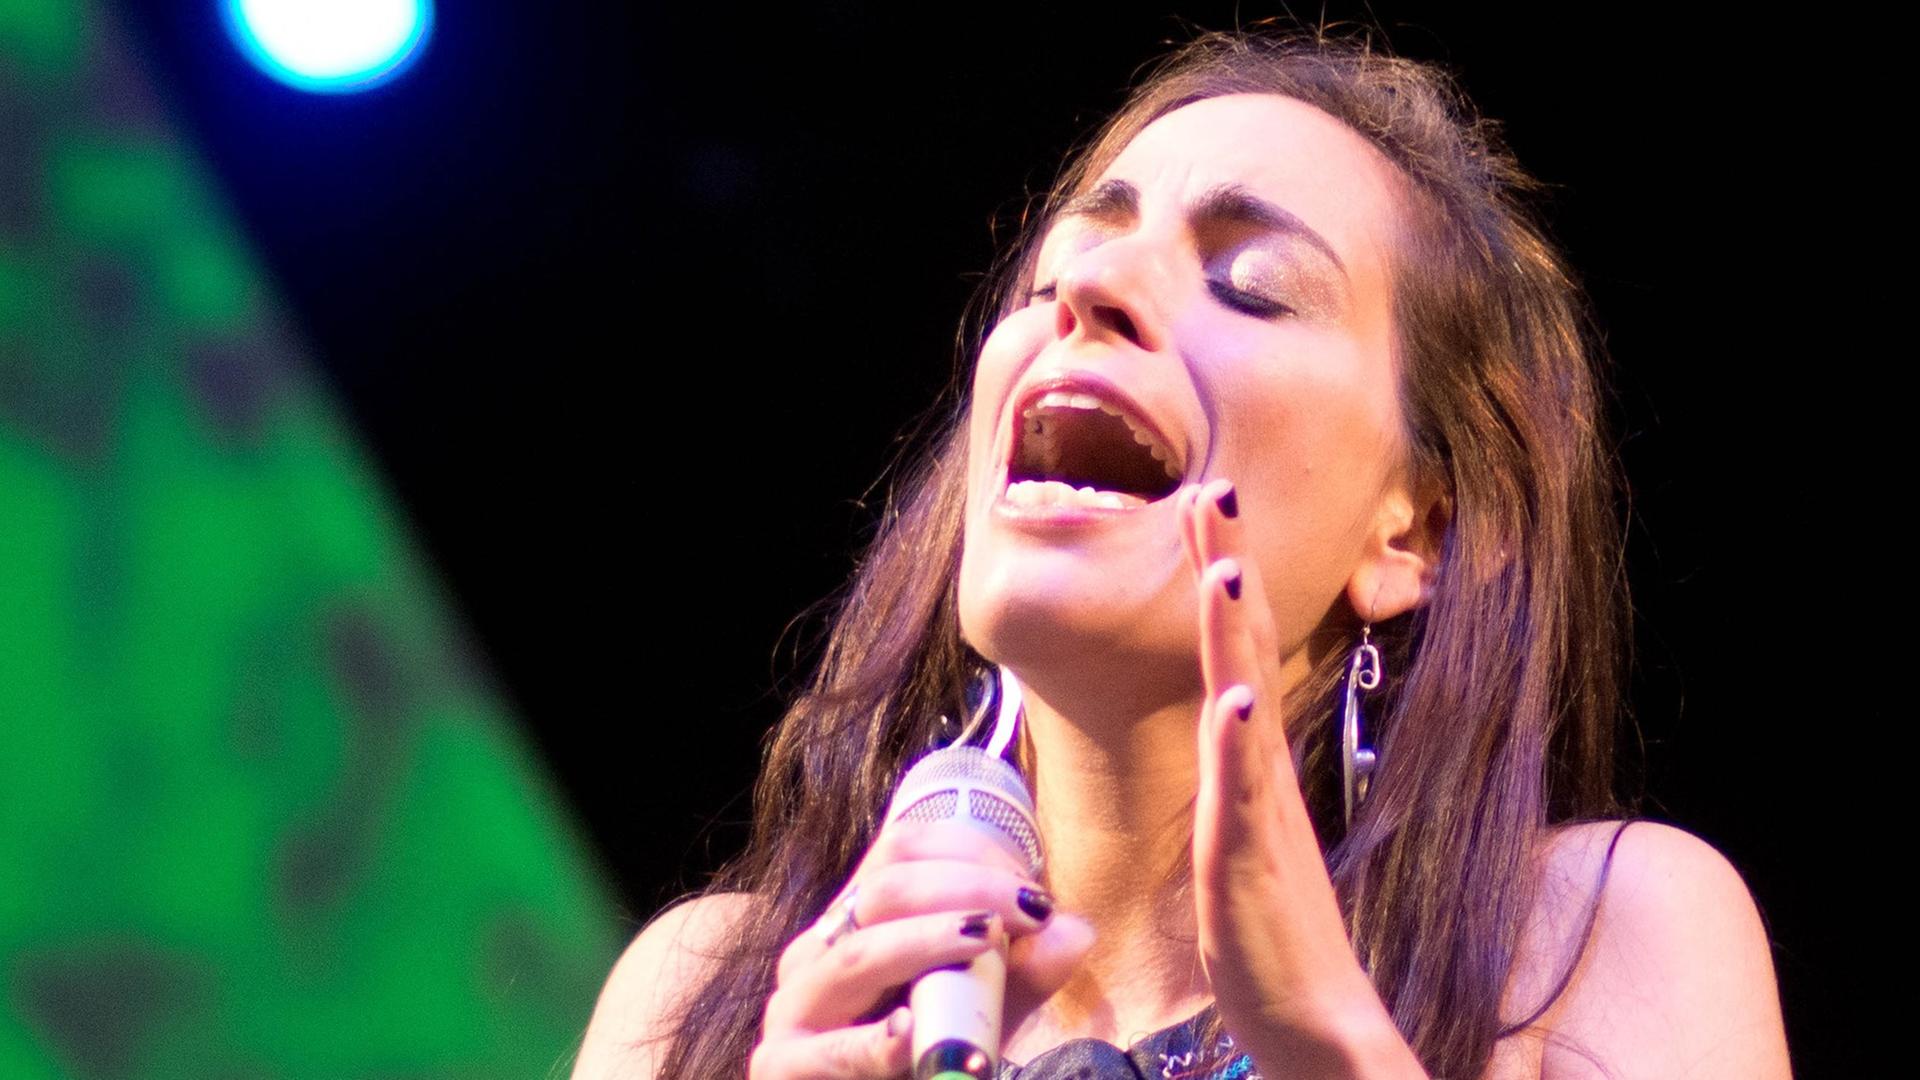 Die US-amerikanische Sängerin Sofia Rei singt am 17.05.2013 auf dem Moers Festvial in Moers beim "Song Project" des US-Komponisten John Zorn.